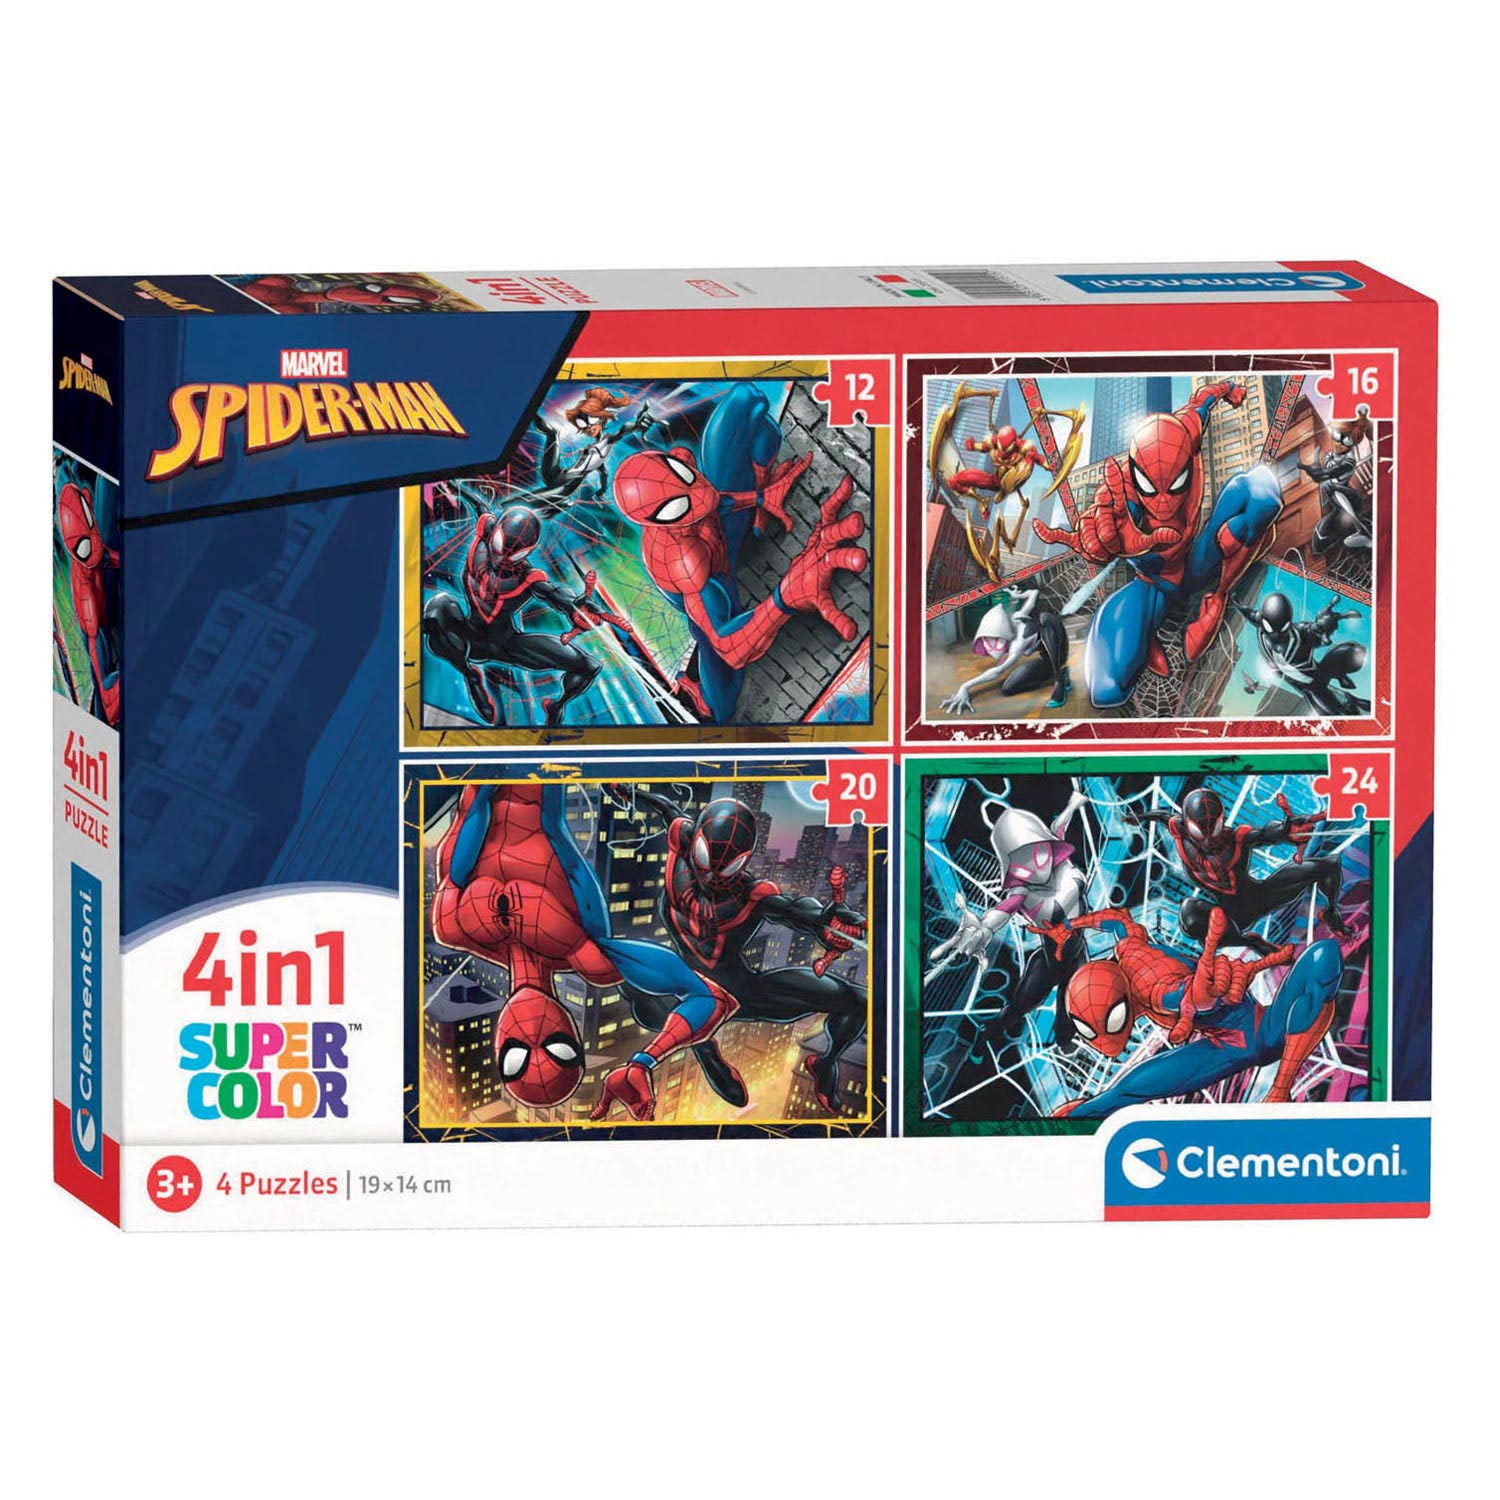 Clementoni - Puzzle Spiderman 4in1